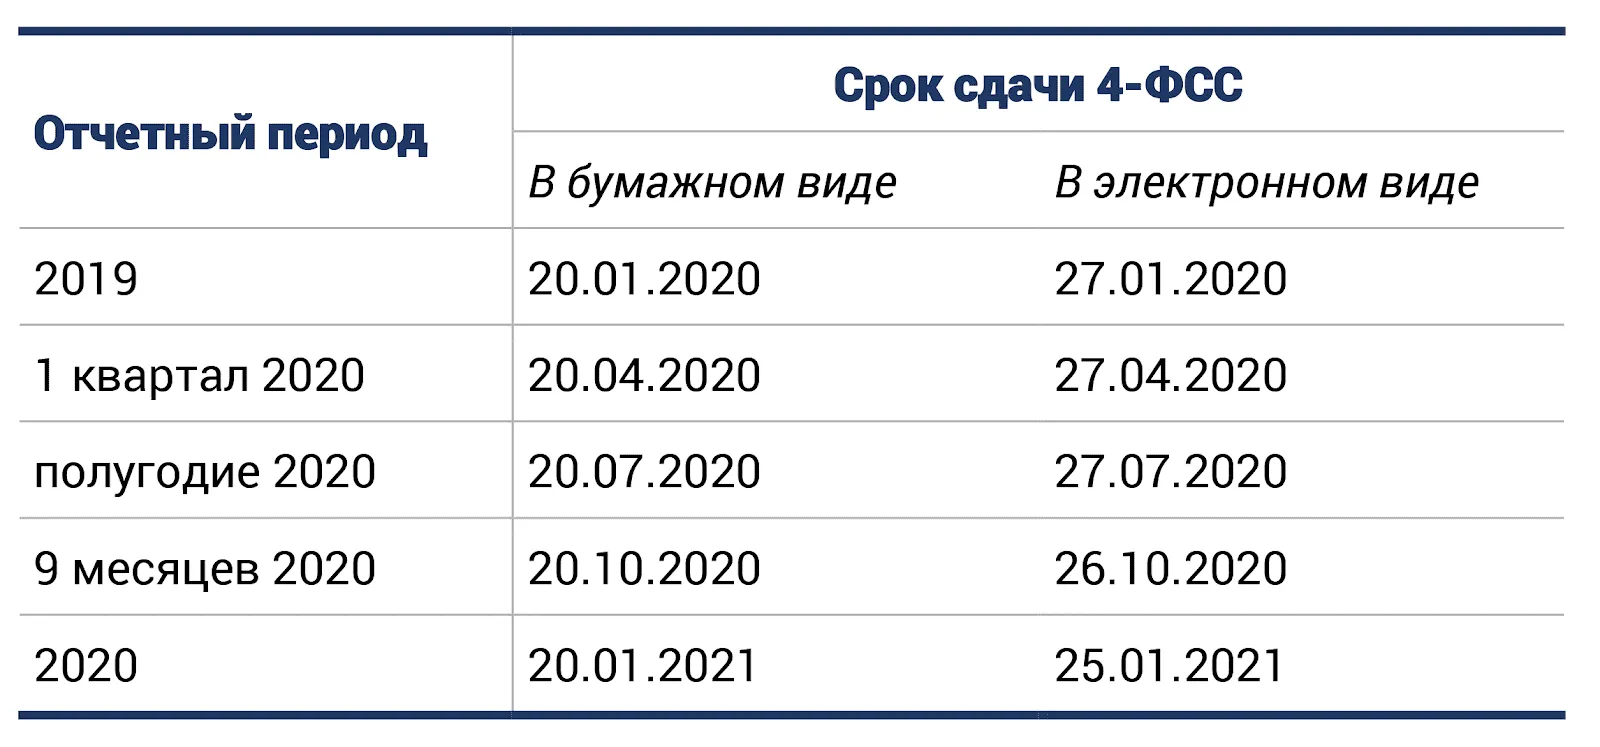 Ндс 1 кв 2024 срок сдачи. 4-ФСС сроки сдачи в 2022 году. Сроки сдачи ФСС В 2020. ФСС сроки сдачи в 2022 году. Сроки сдачи отчетности 4 ФСС.